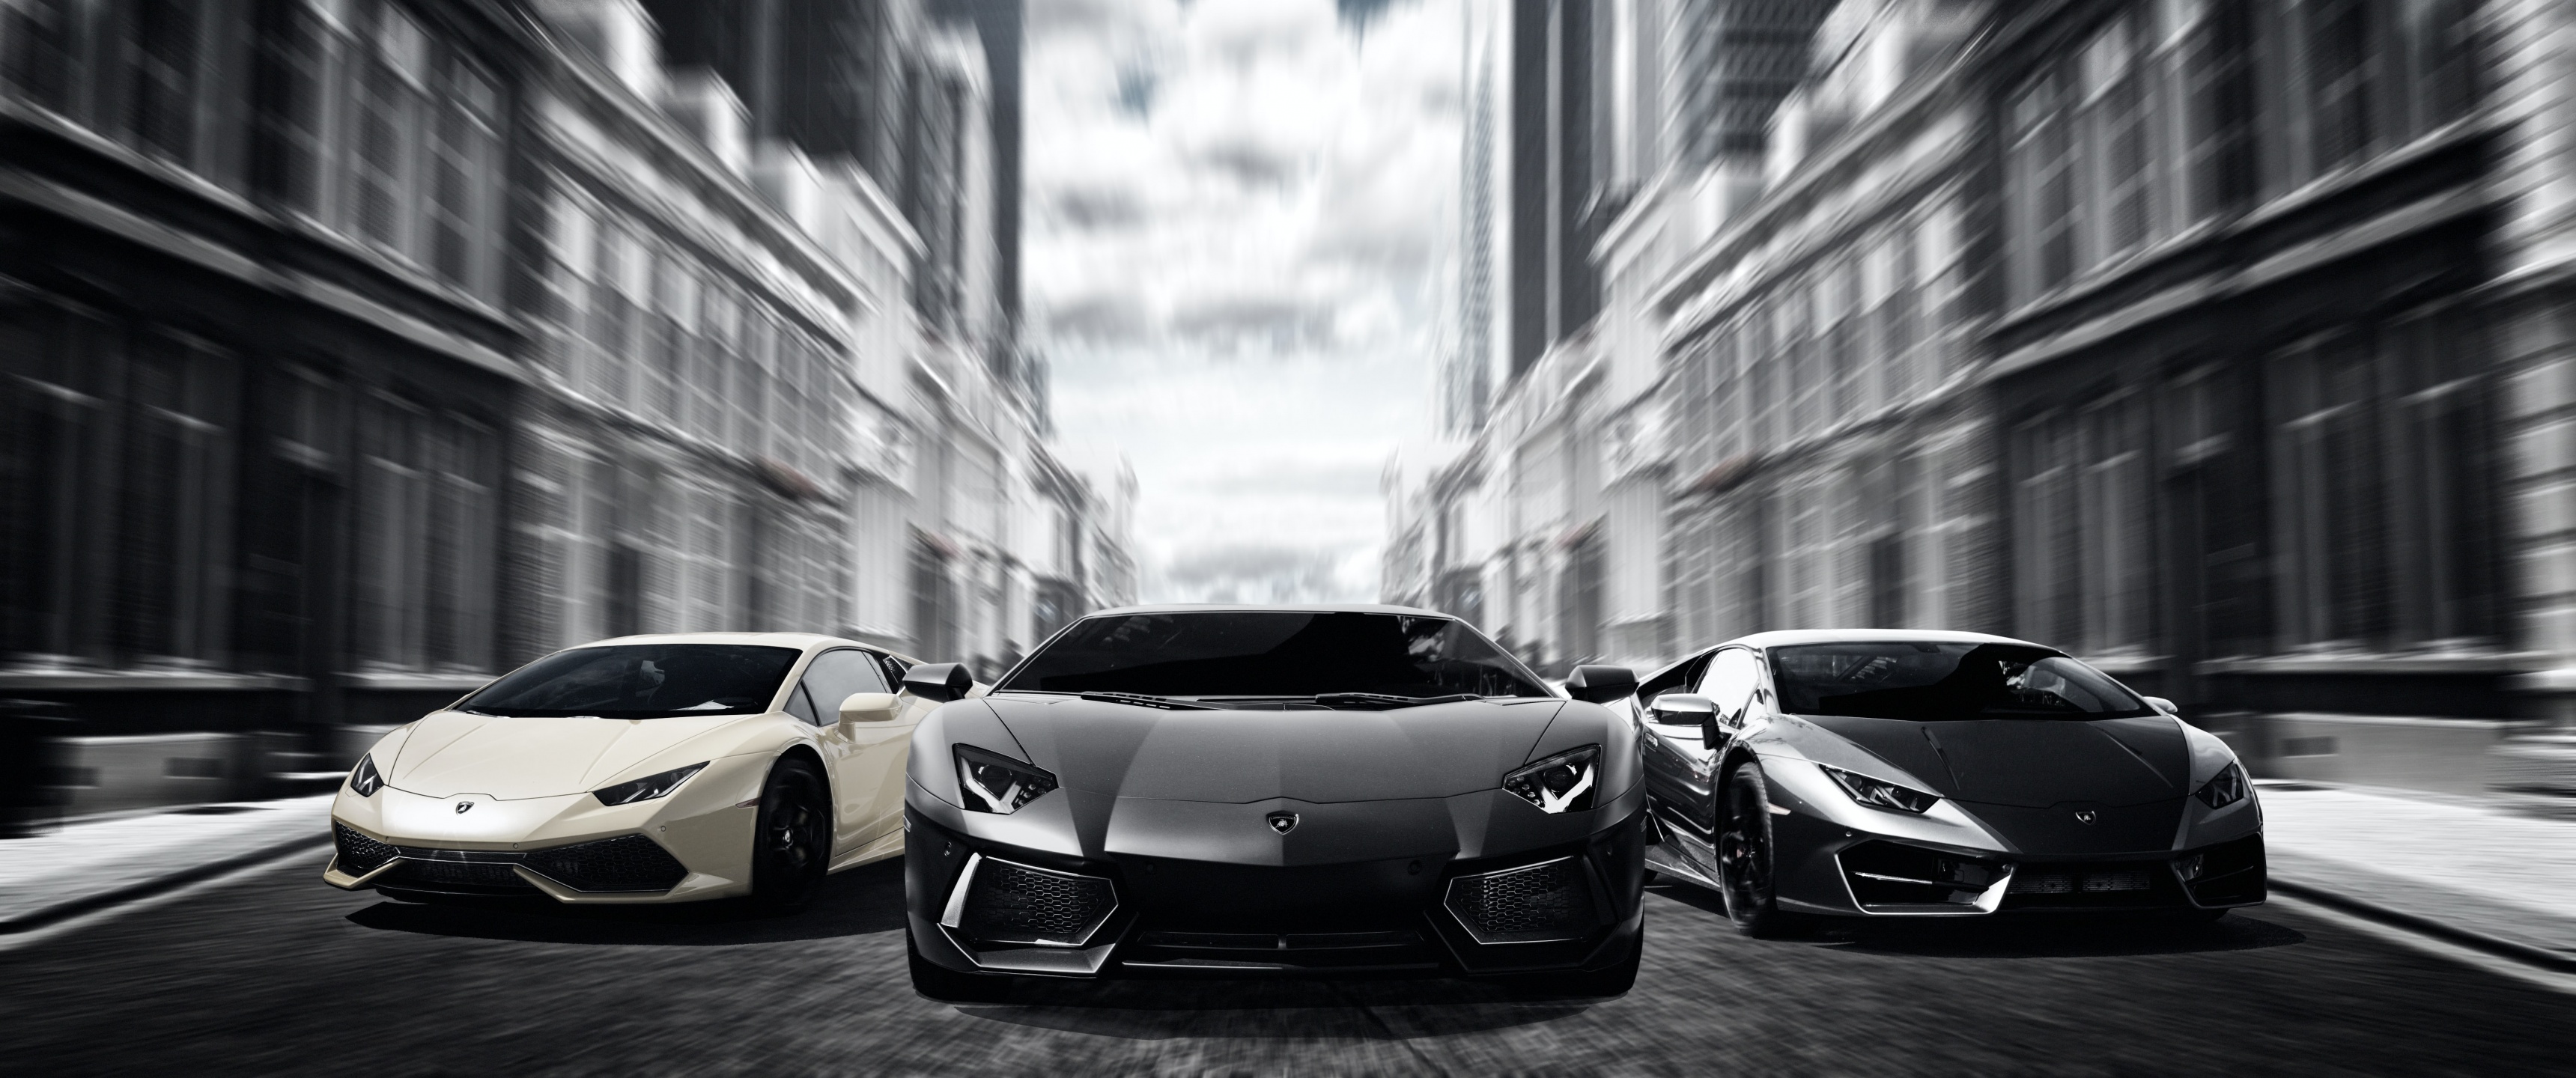 Lamborghini Cars Wallpaper 4K, Sports cars, Black/Dark, #4140